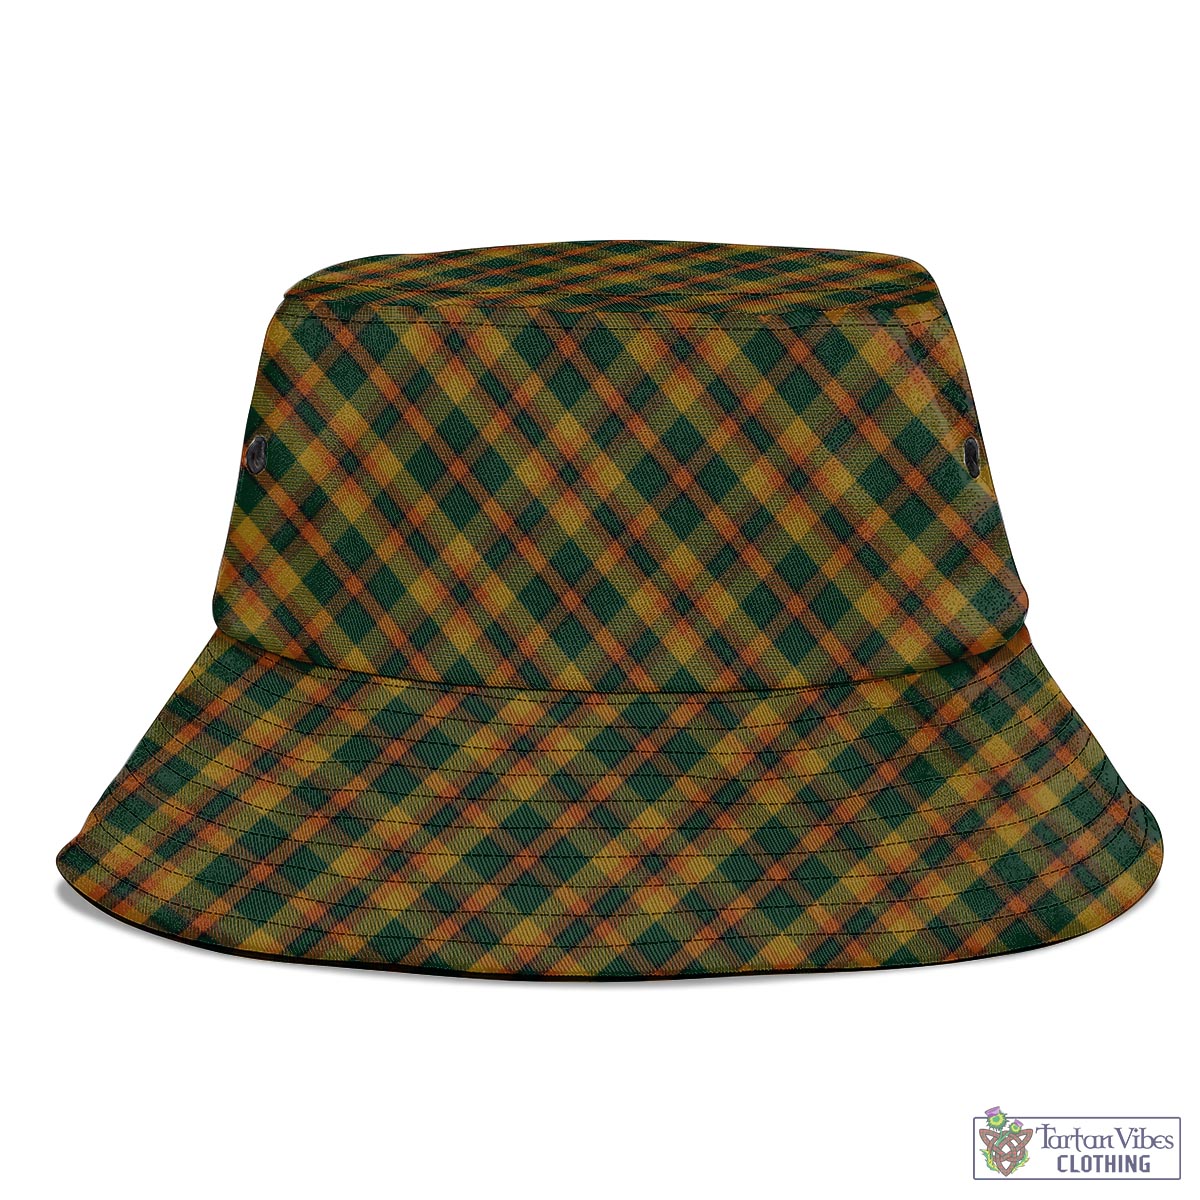 Tartan Vibes Clothing Londonderry (Derry) County Ireland Tartan Bucket Hat